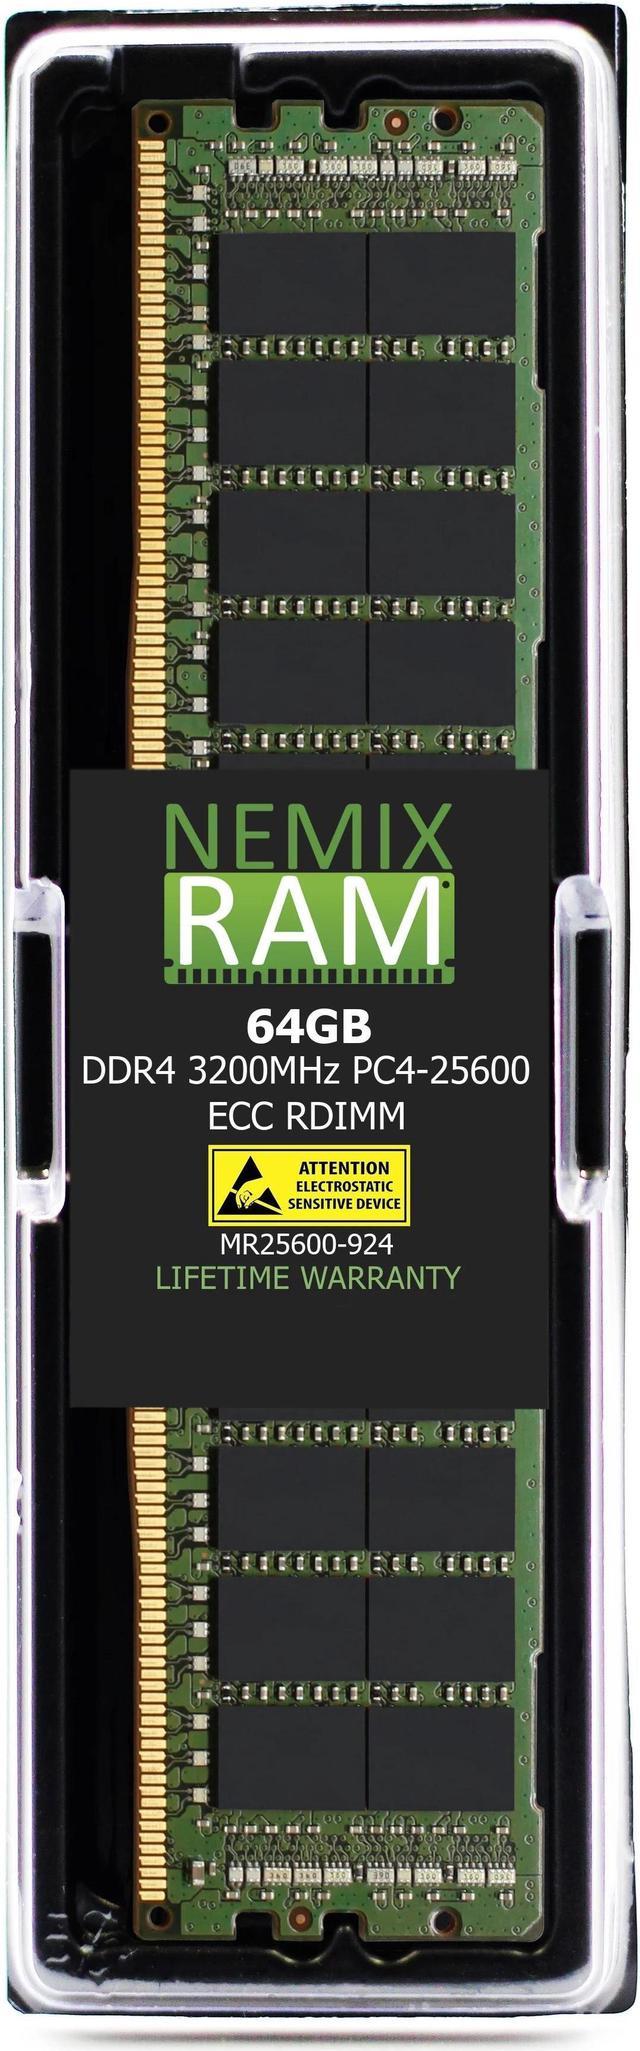 NEMIX RAM 64GB DDR4 3200MHz PC4-25600 ECC RDIMM Compatible with DELL  PowerEdge R7525 Rack Server